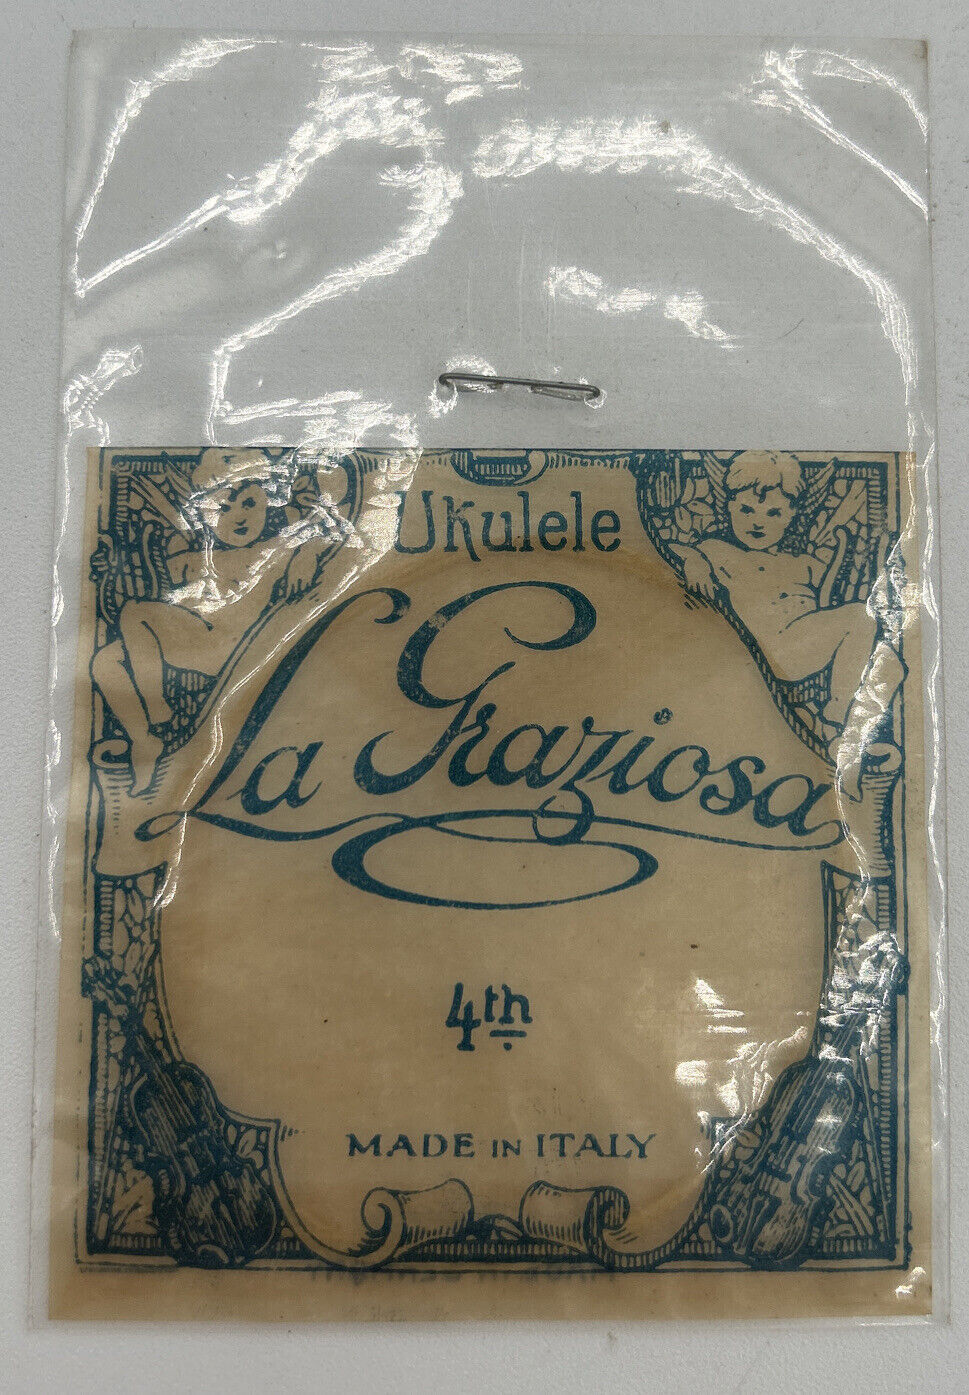 Vintage Rare La Graziosa Ukulele 4th Strings Made in Italy / Germany PB18-12